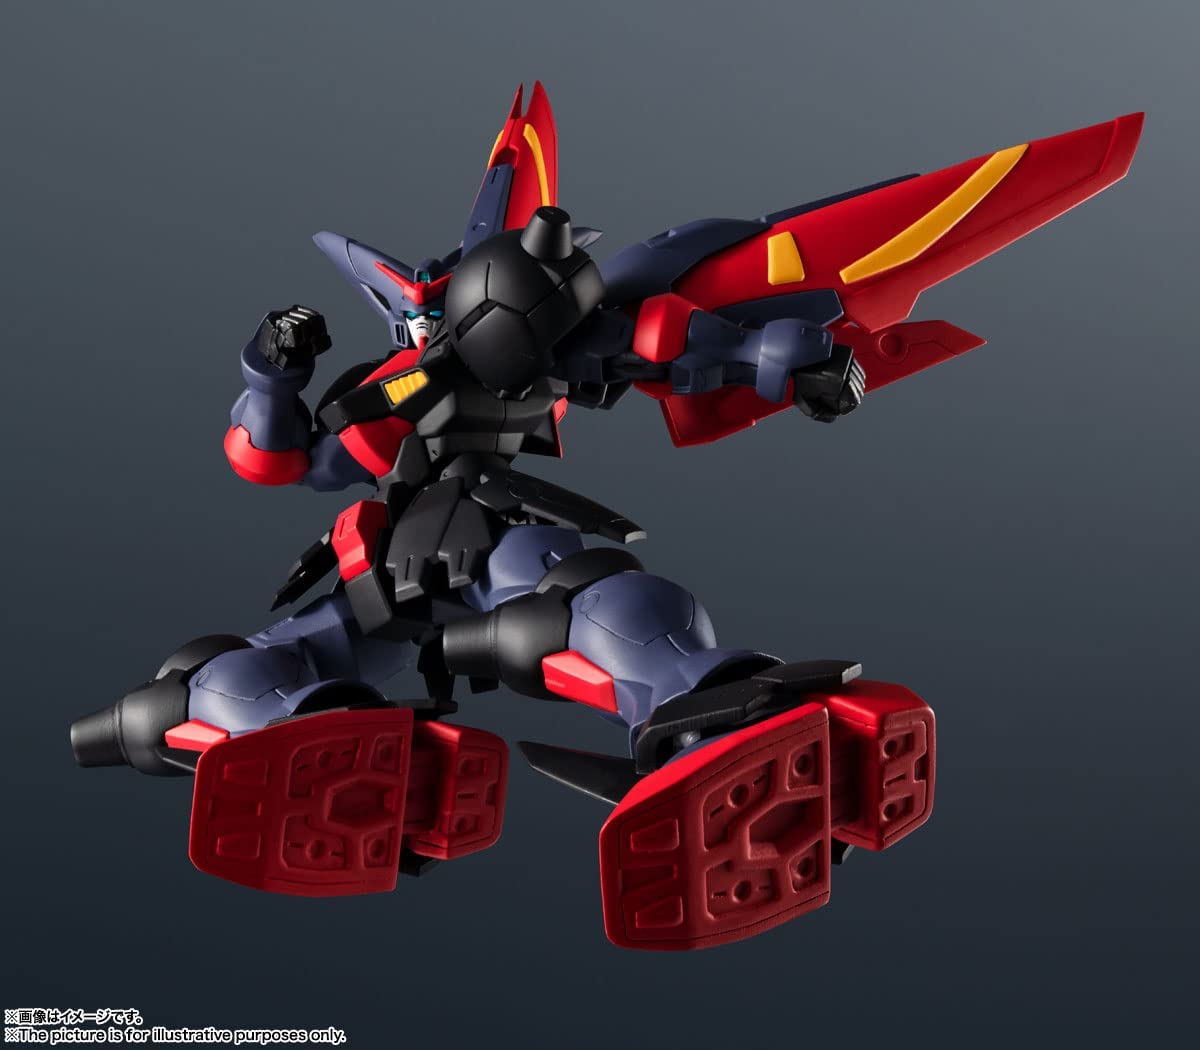 Tamashi Nations – Mobile Fighter G Gundam – GF13-001 NHII Master Gundam, Bandai Spirits Gundam Universe Actionfigur